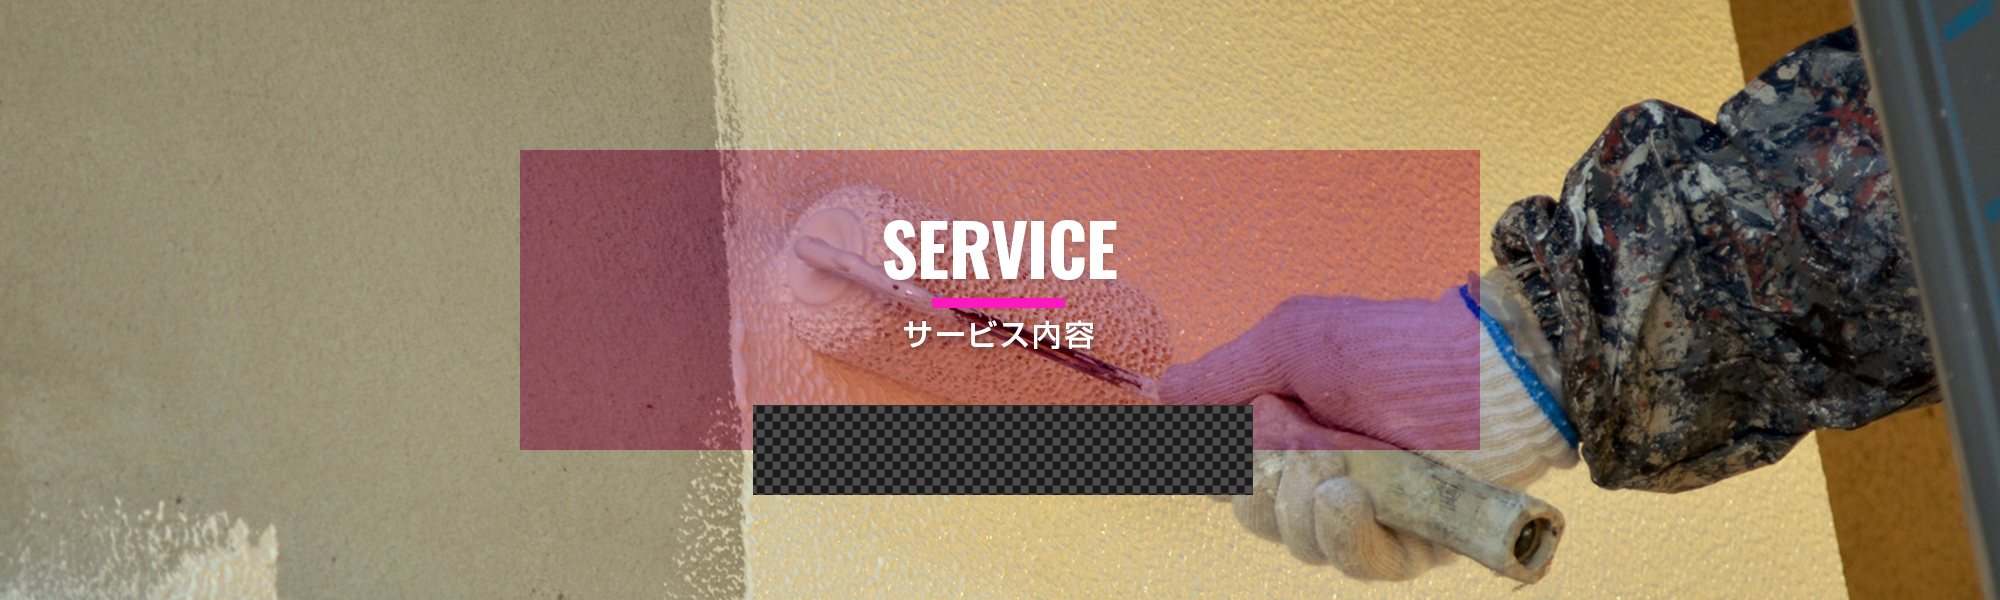 banner_service